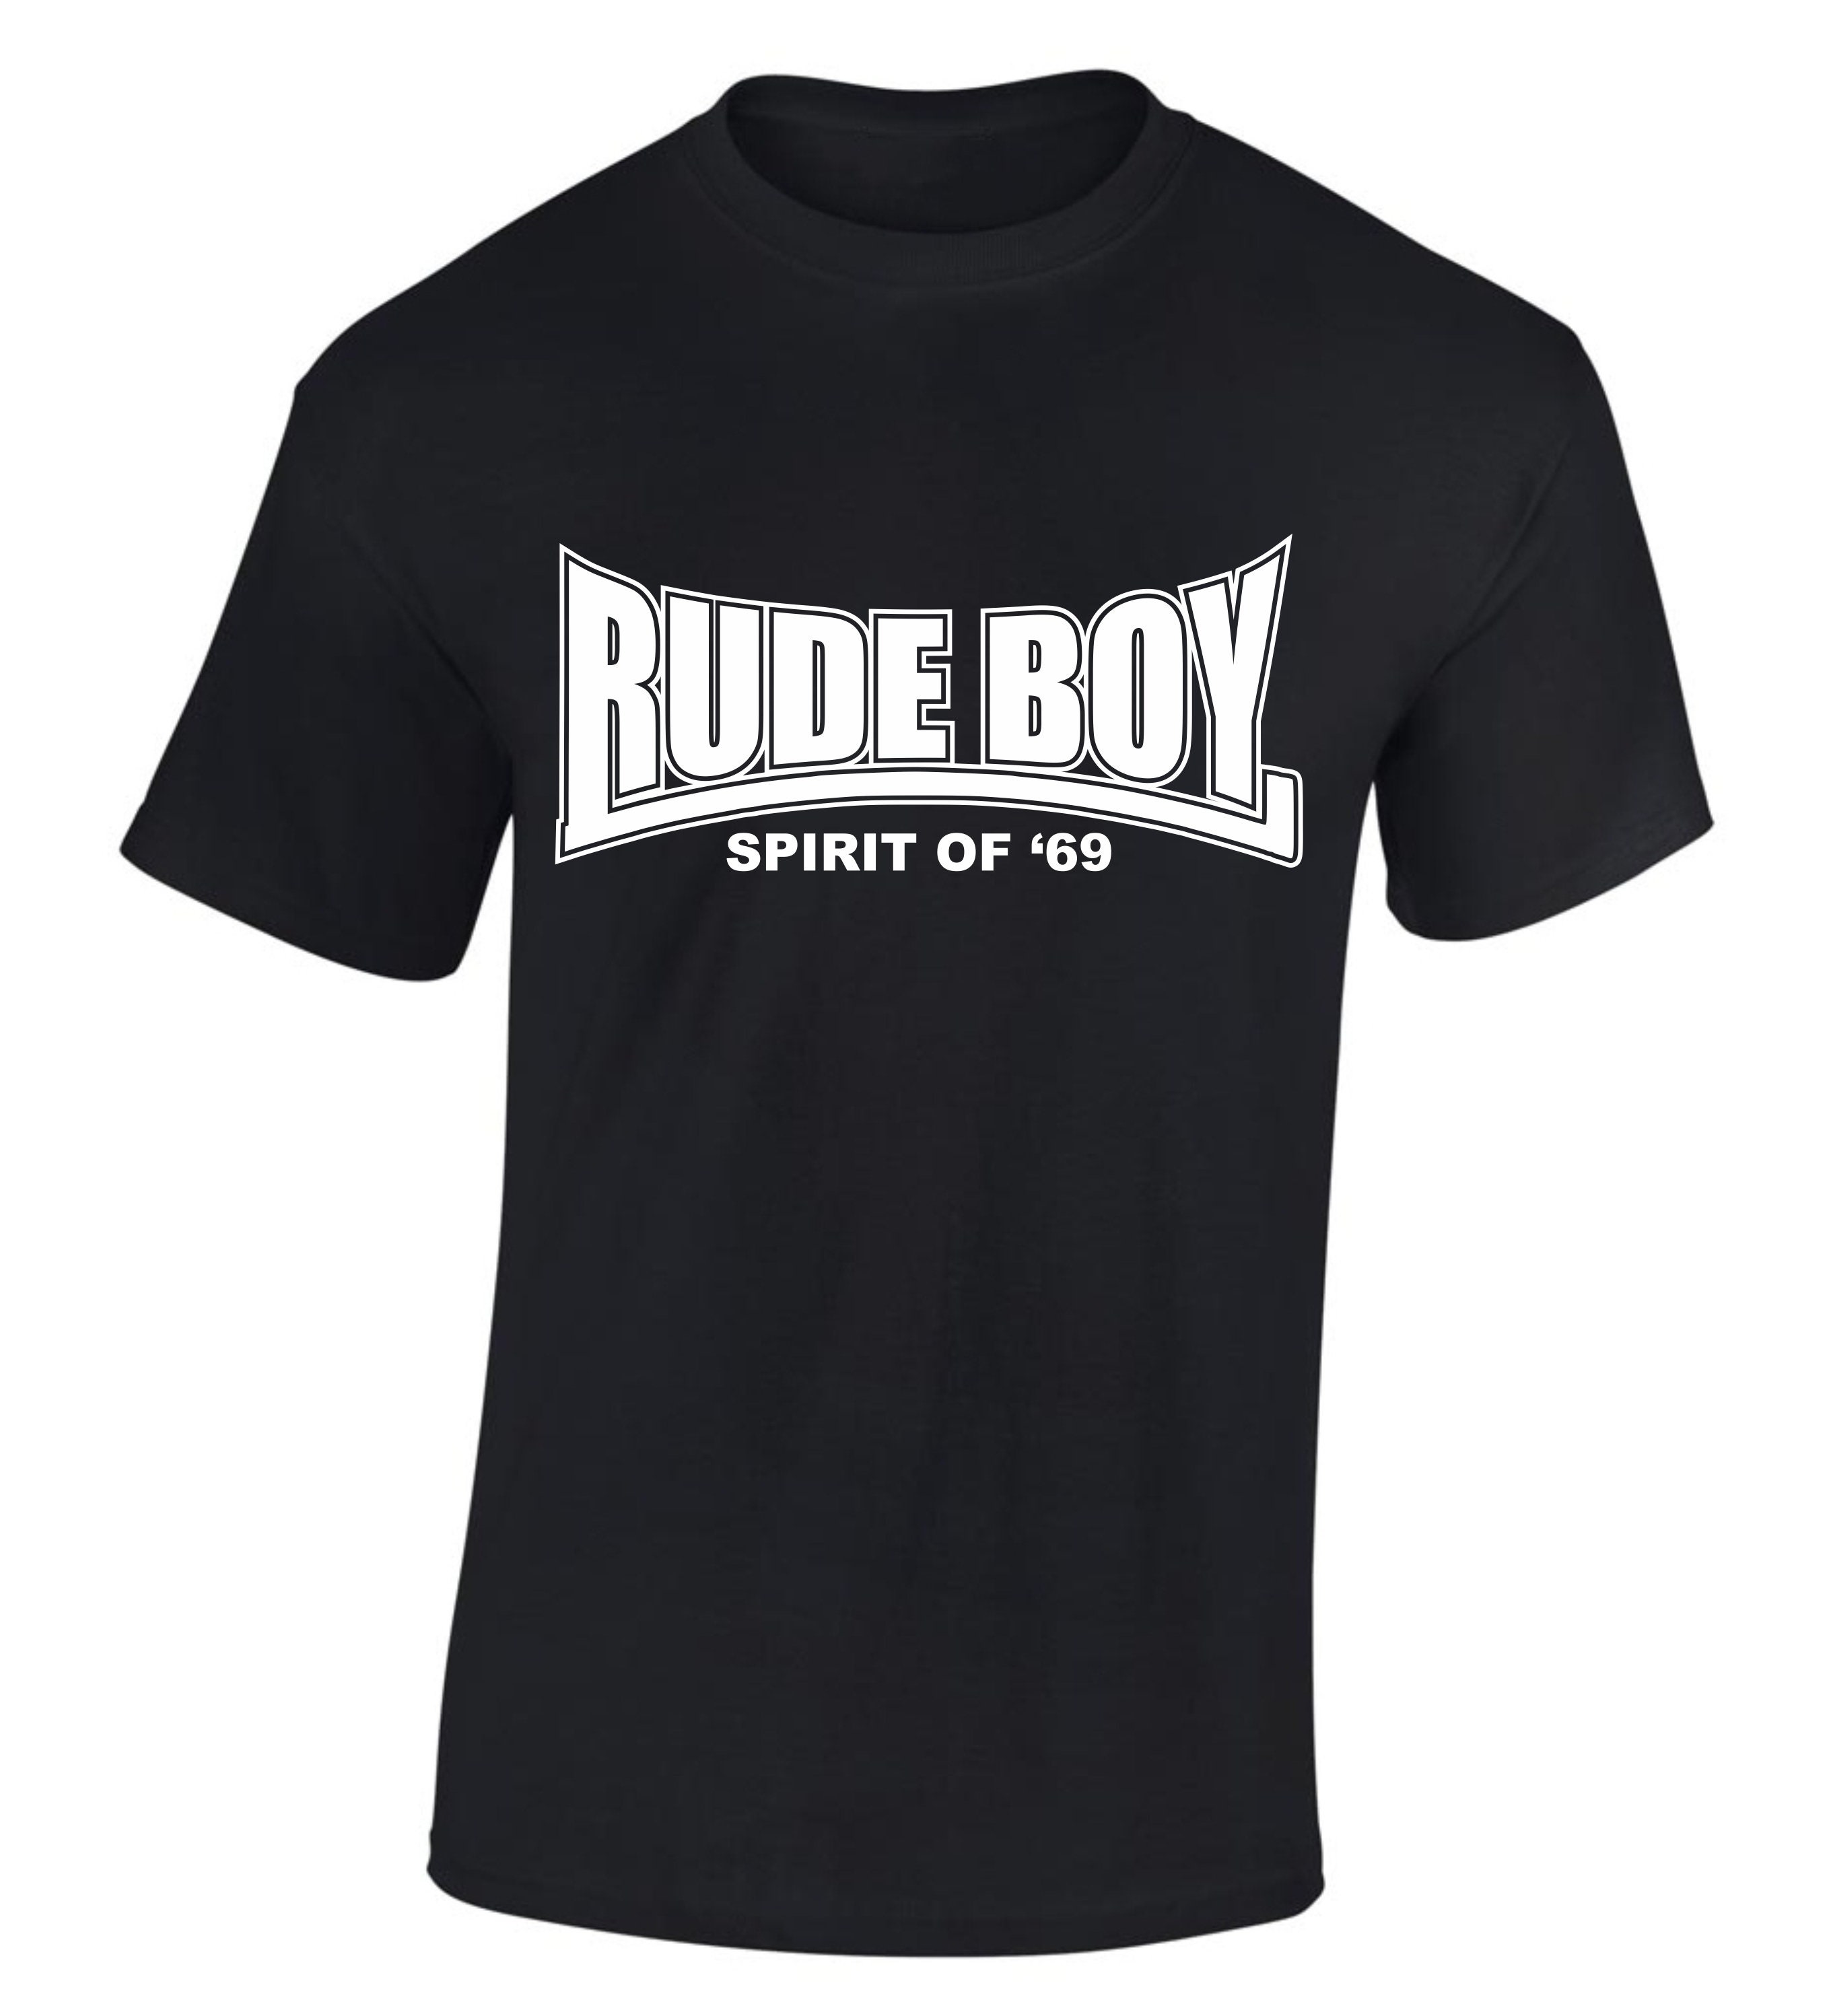 Rudeboys Camiseta MMA